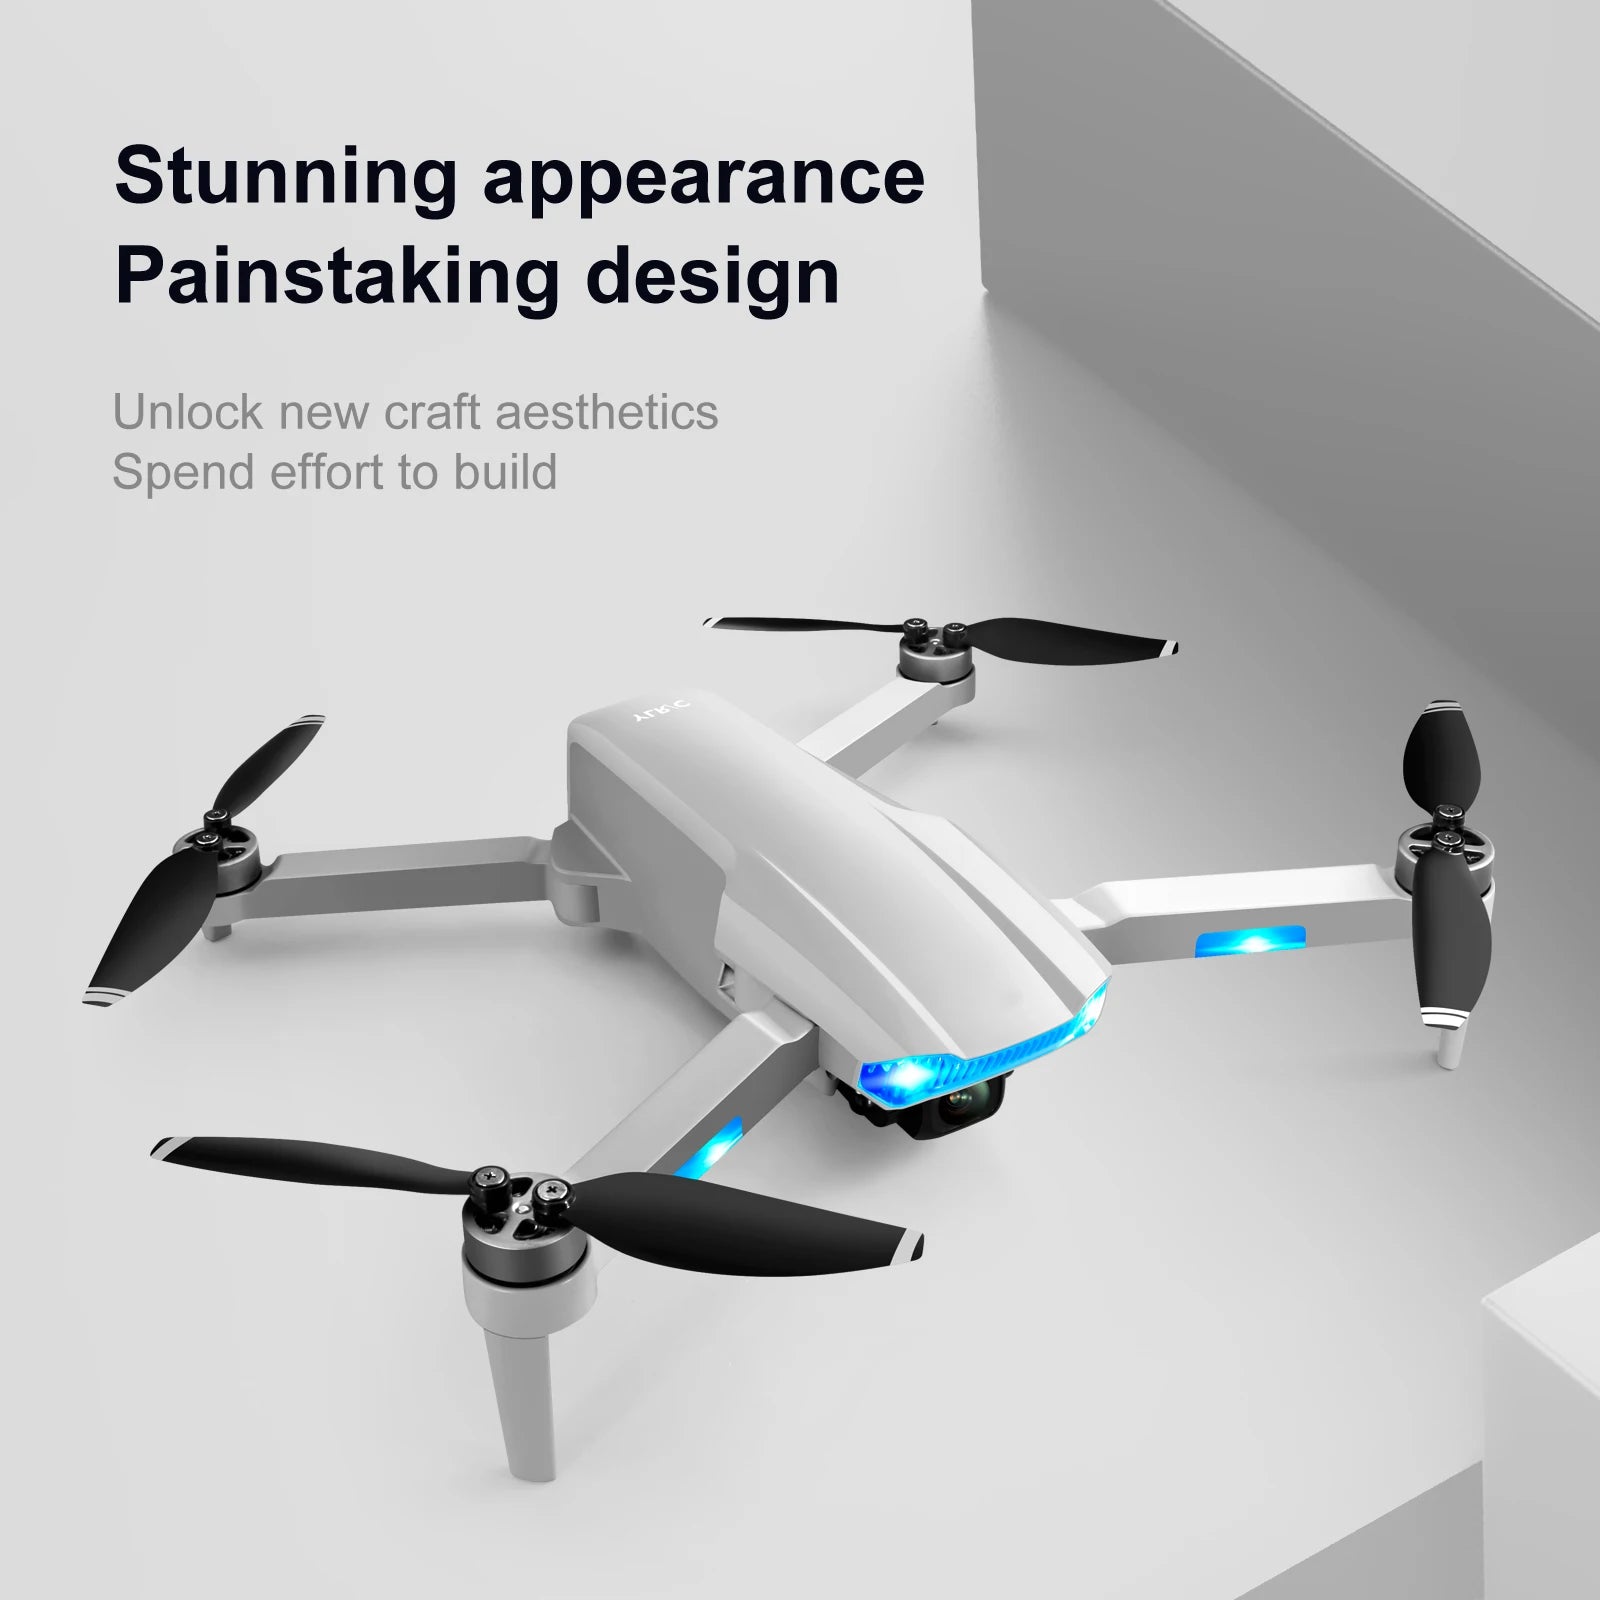 QJ S106 GPS Drone, stunning appearance painstaking design unlocks new craft aesthetics spend effort